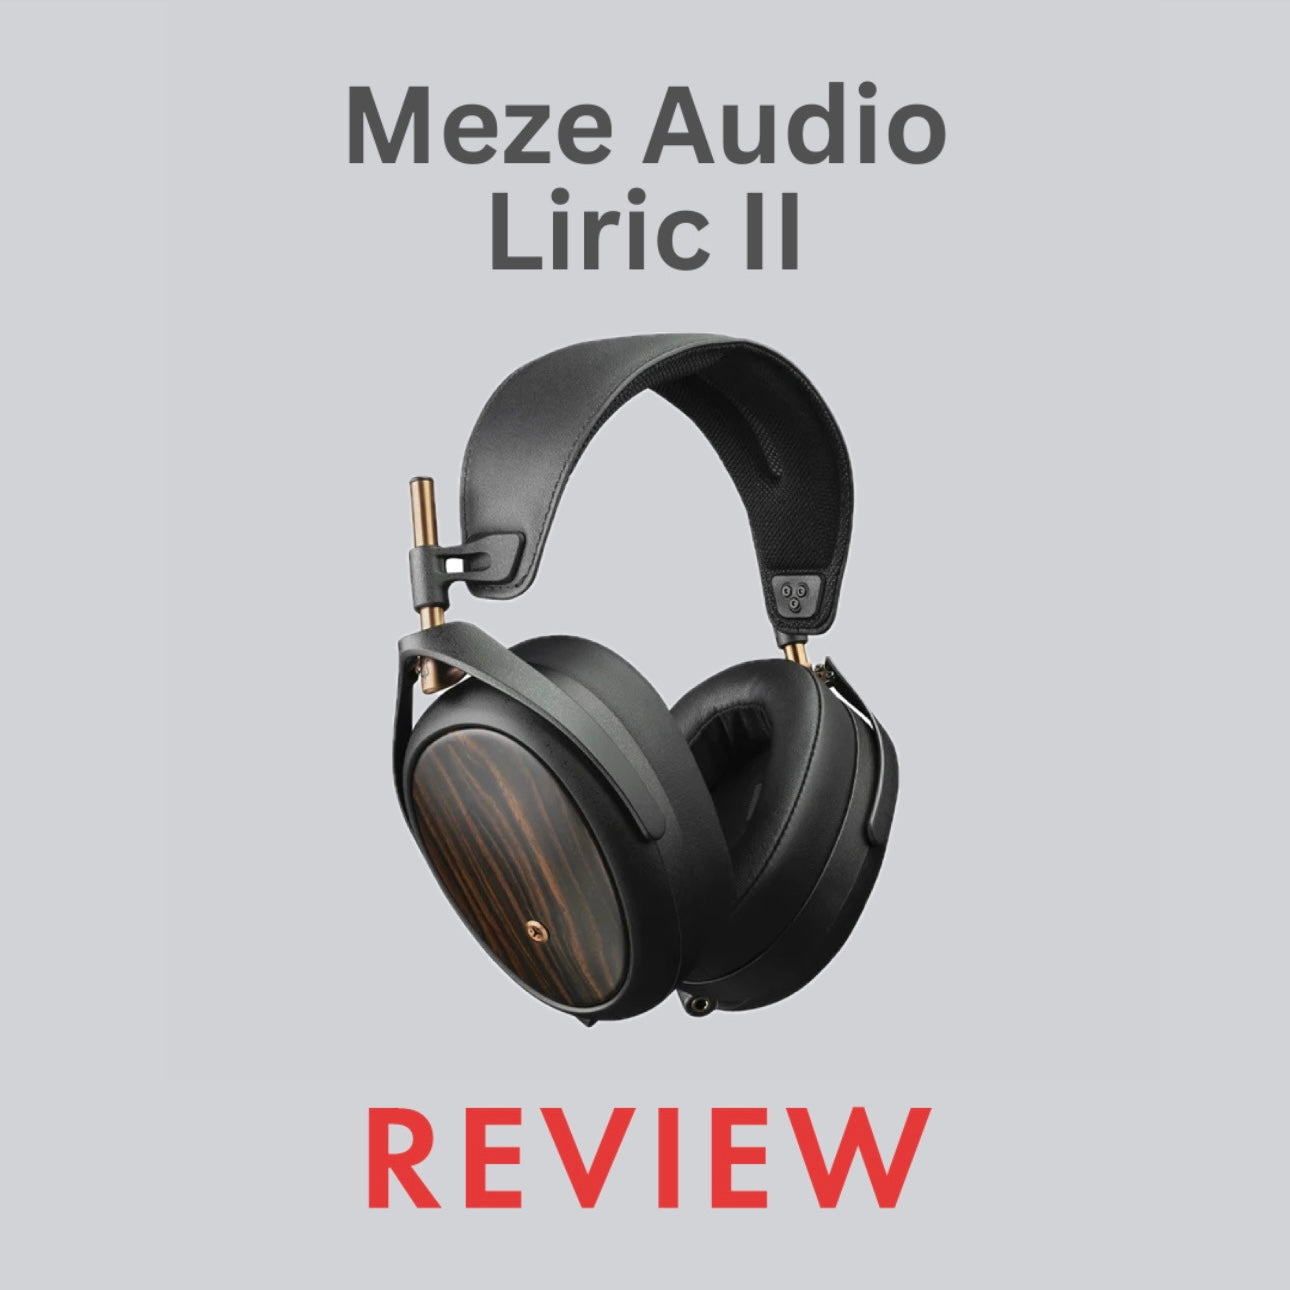 Meze Audio Liric II Review